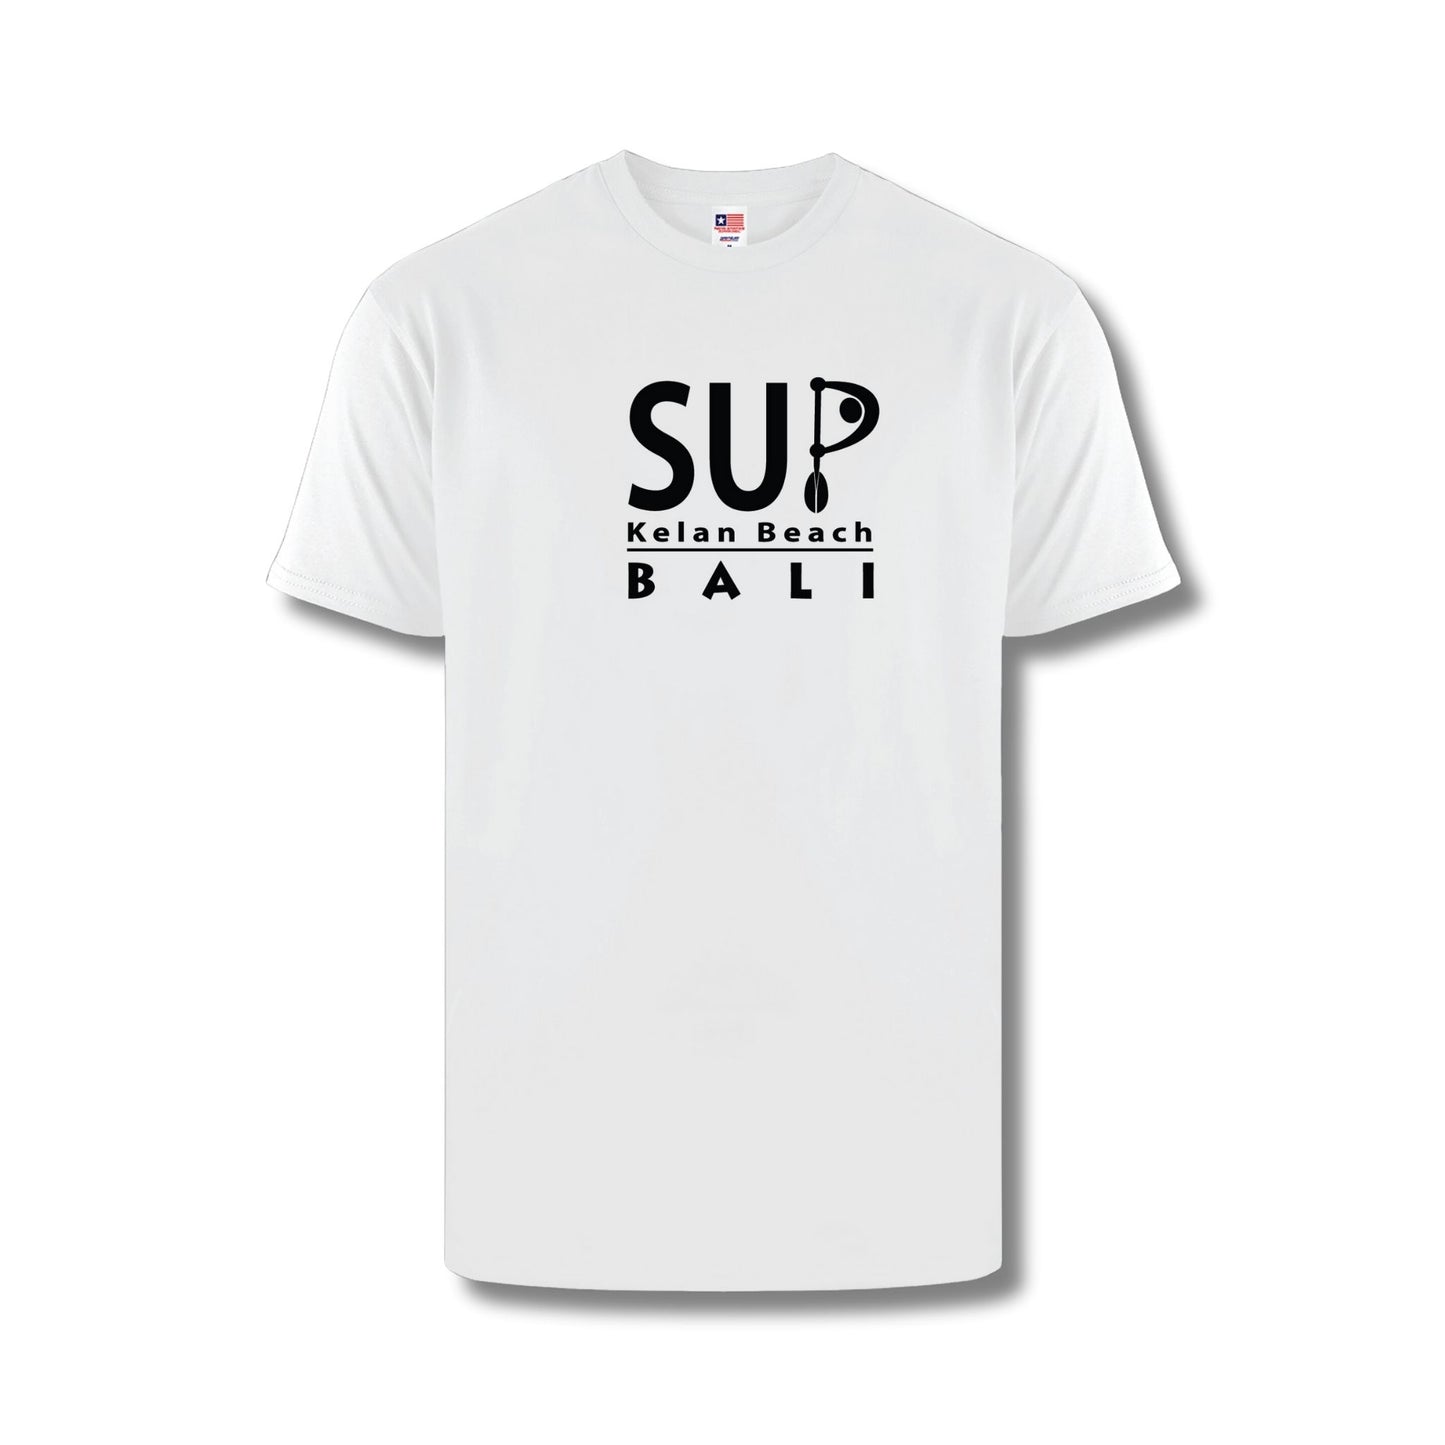 Priority SUP T-shirts | SUP Kelan Beach | Unisex S,M,L,XL,XXL